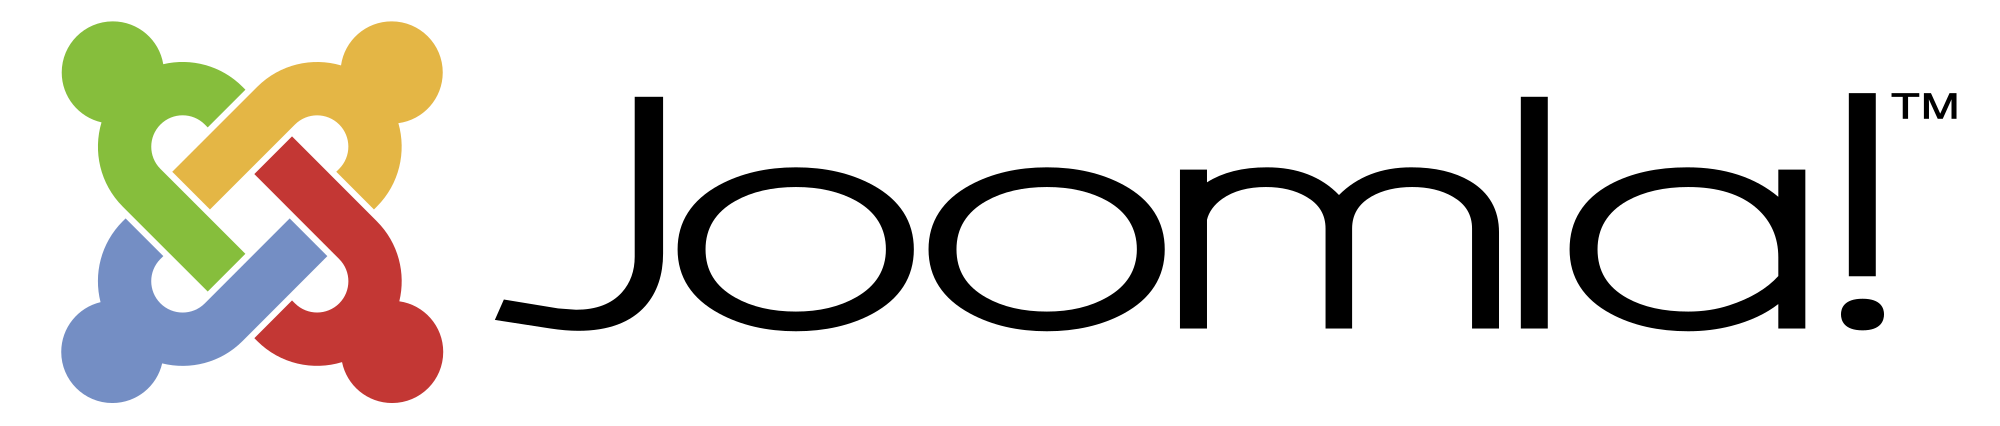 Horizontal-logo-light-backgro